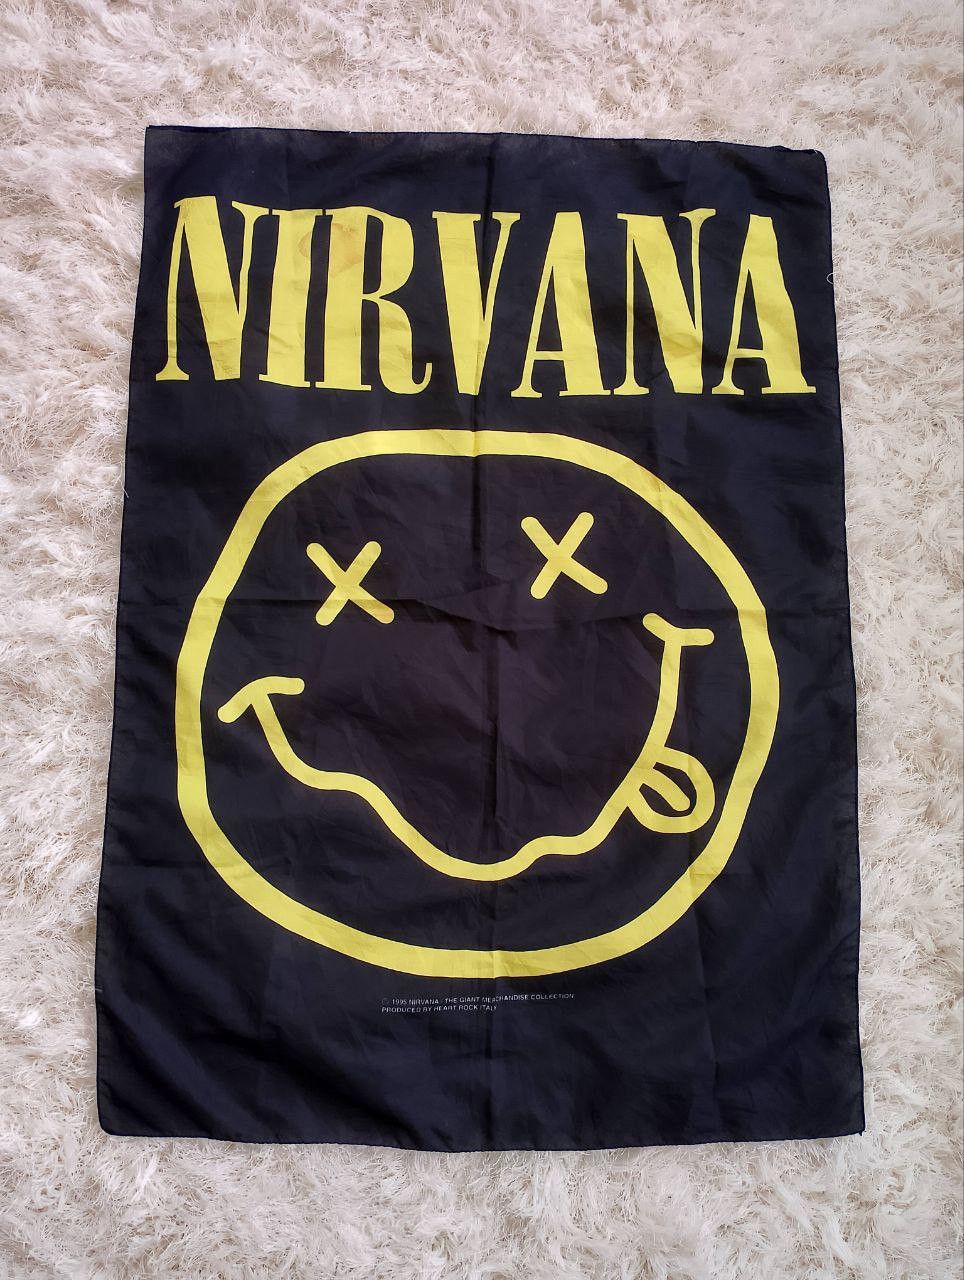 Vintage 1995 Nirvana Smiley Flag Tapestry Wall Banner - 2